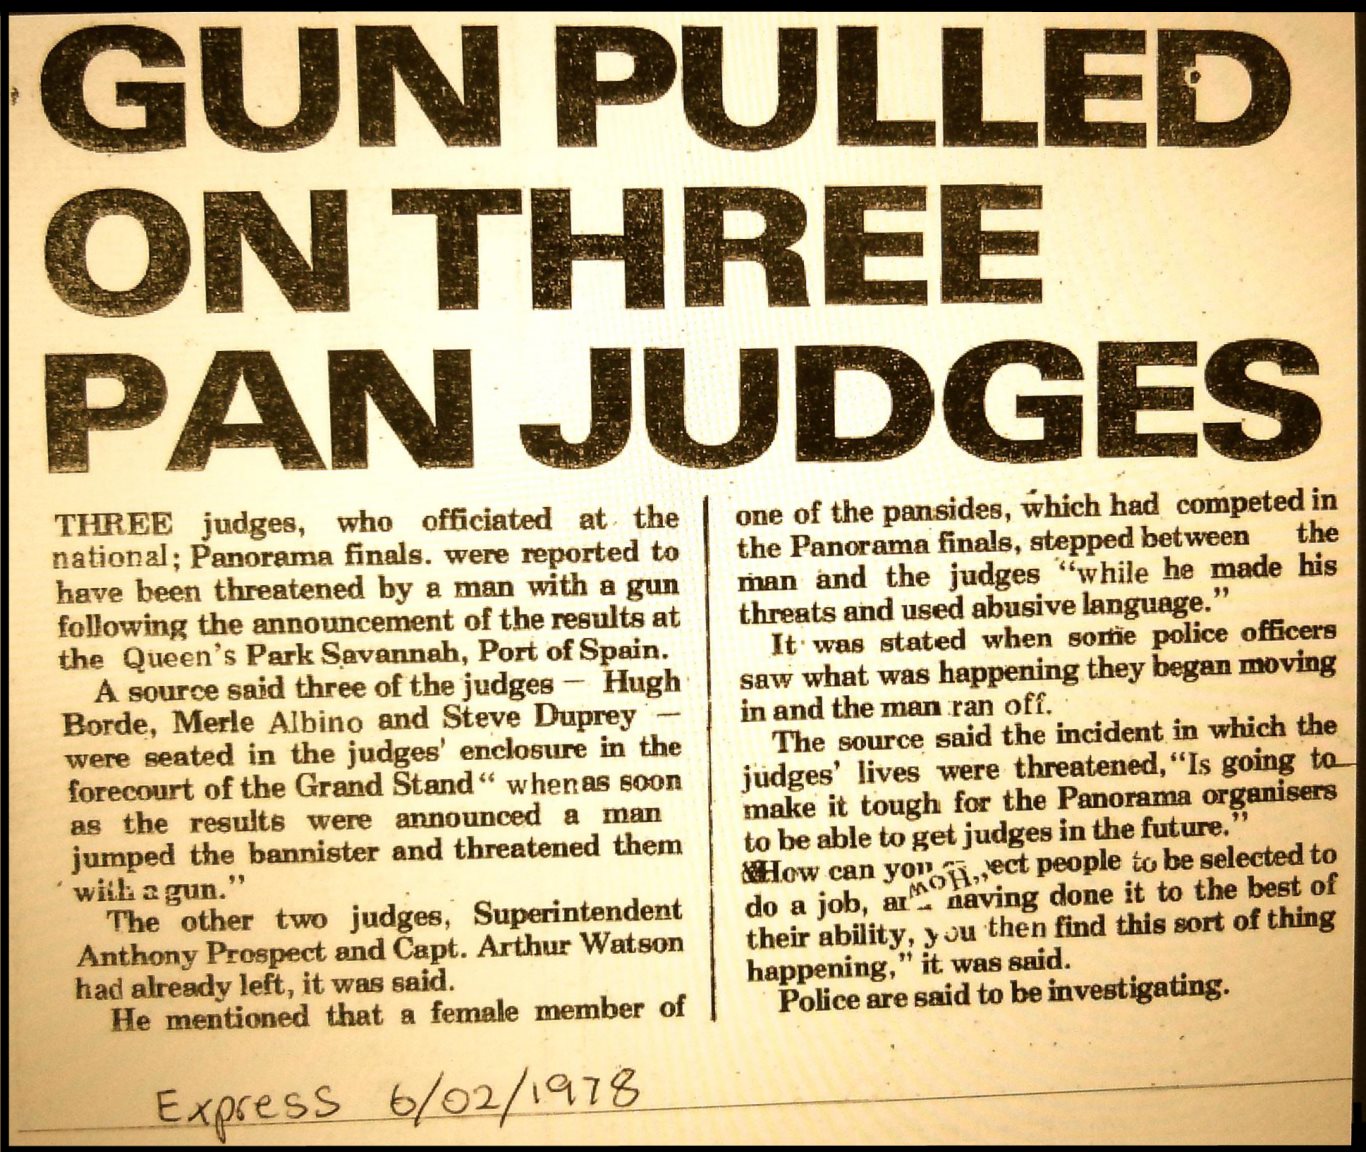 Gun Pulled_Express_19780206_UWI, West Indiana Collection, Alma Jordan Library, Trinidad, TT_ser-02_1366wx1152h